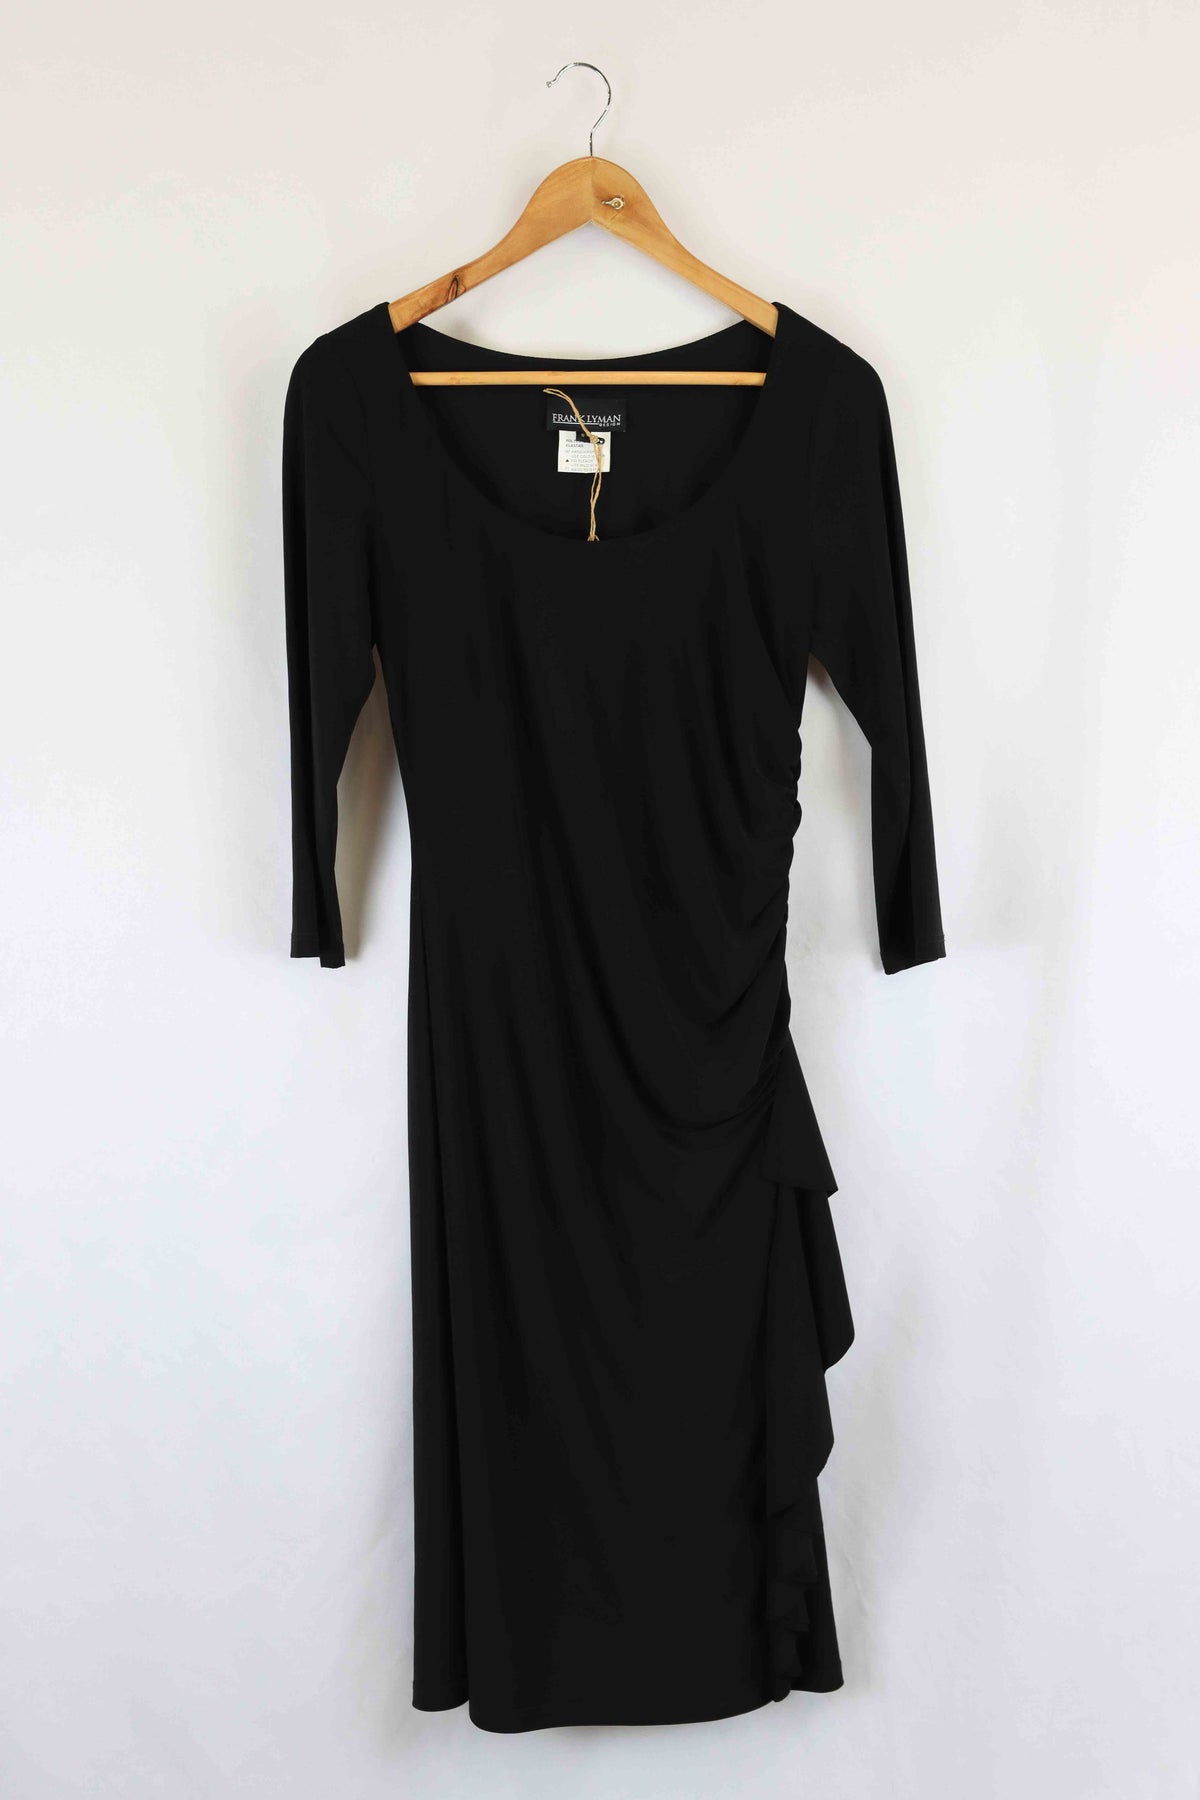 Frank Lyman Black Dress 8